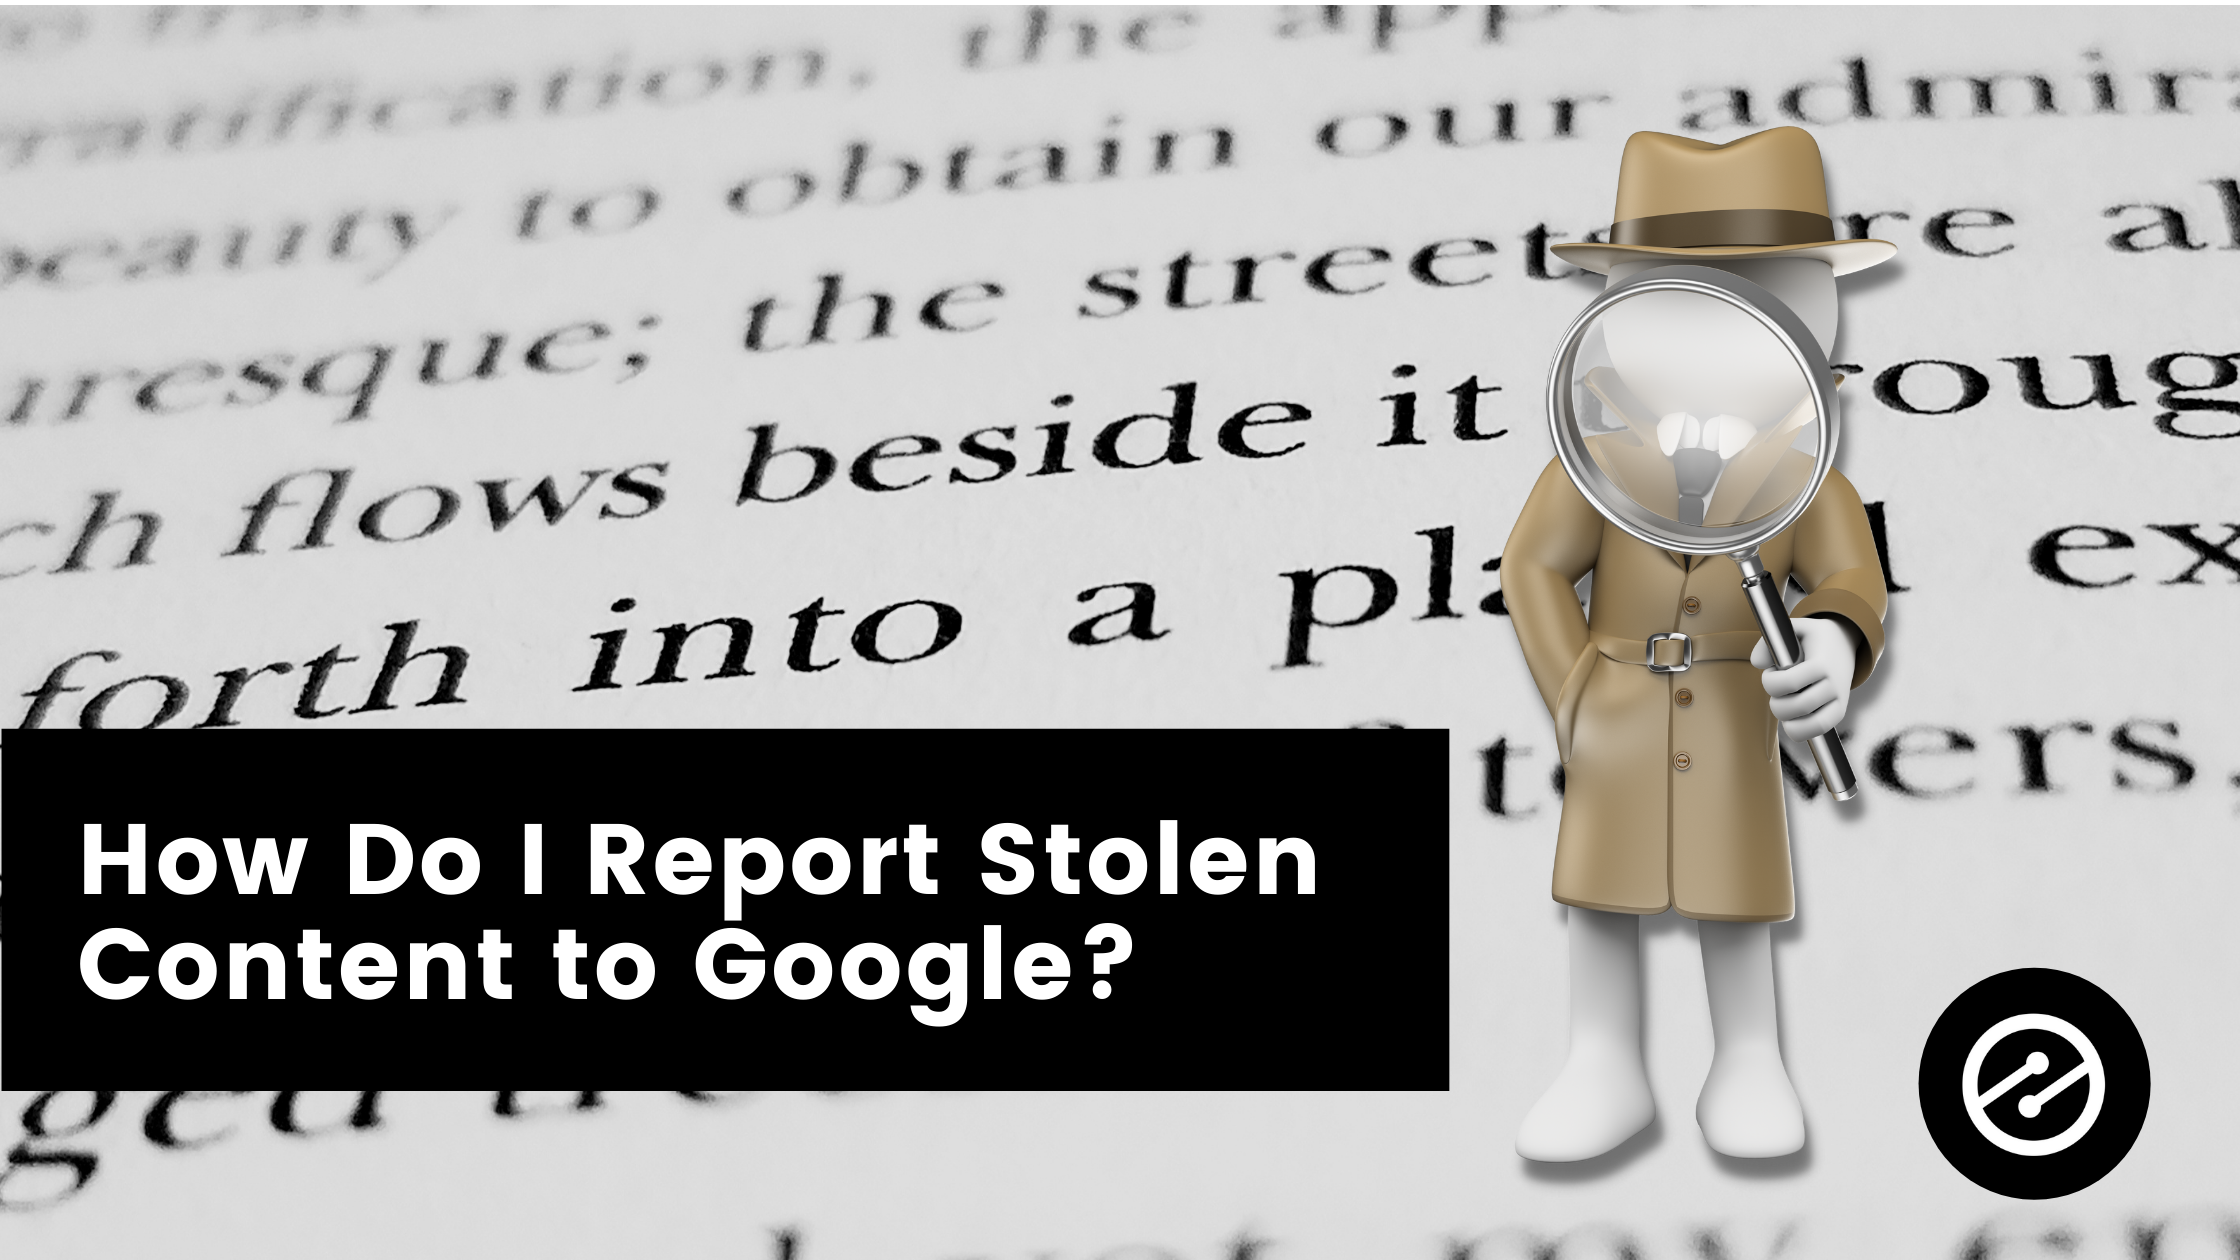 How Do I Report Stolen Content to Google?